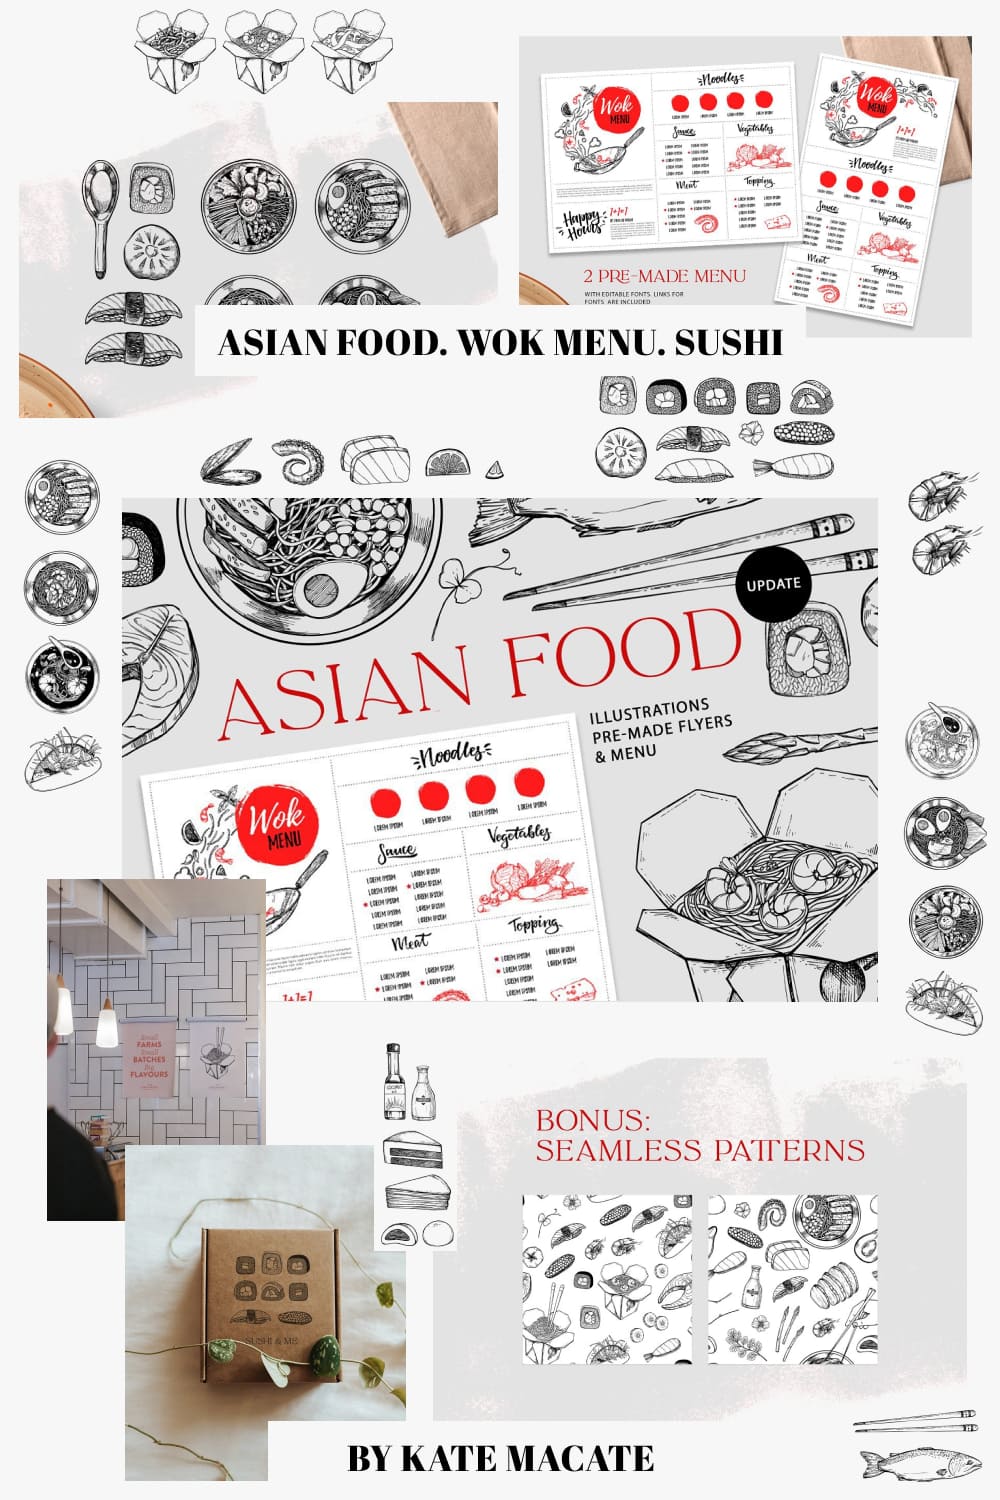 01 asian food. wok menu. sushi pinterest